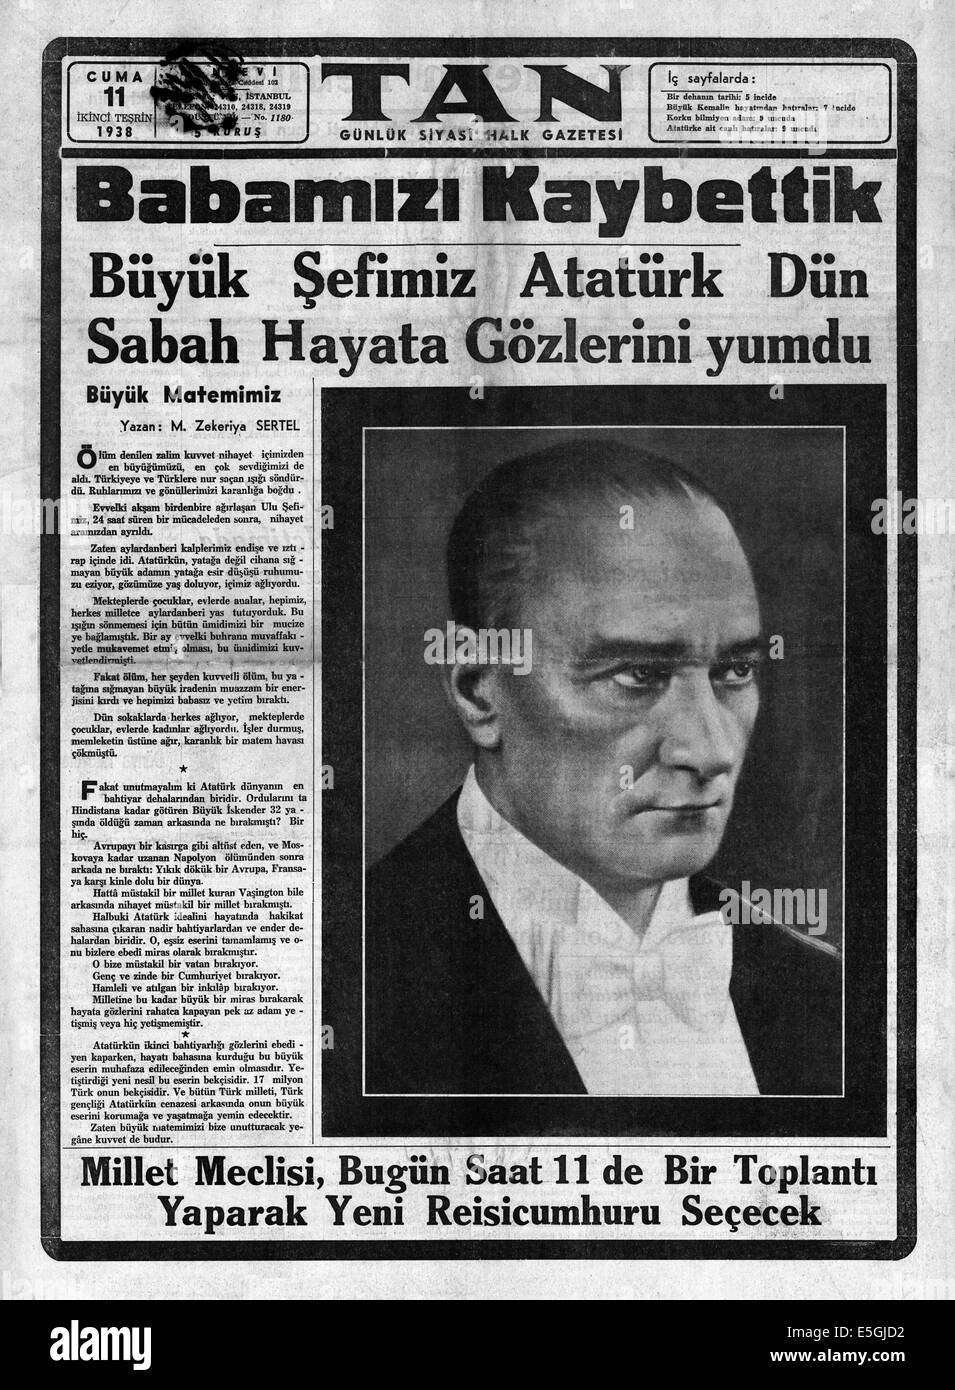 Atatürk Turkey